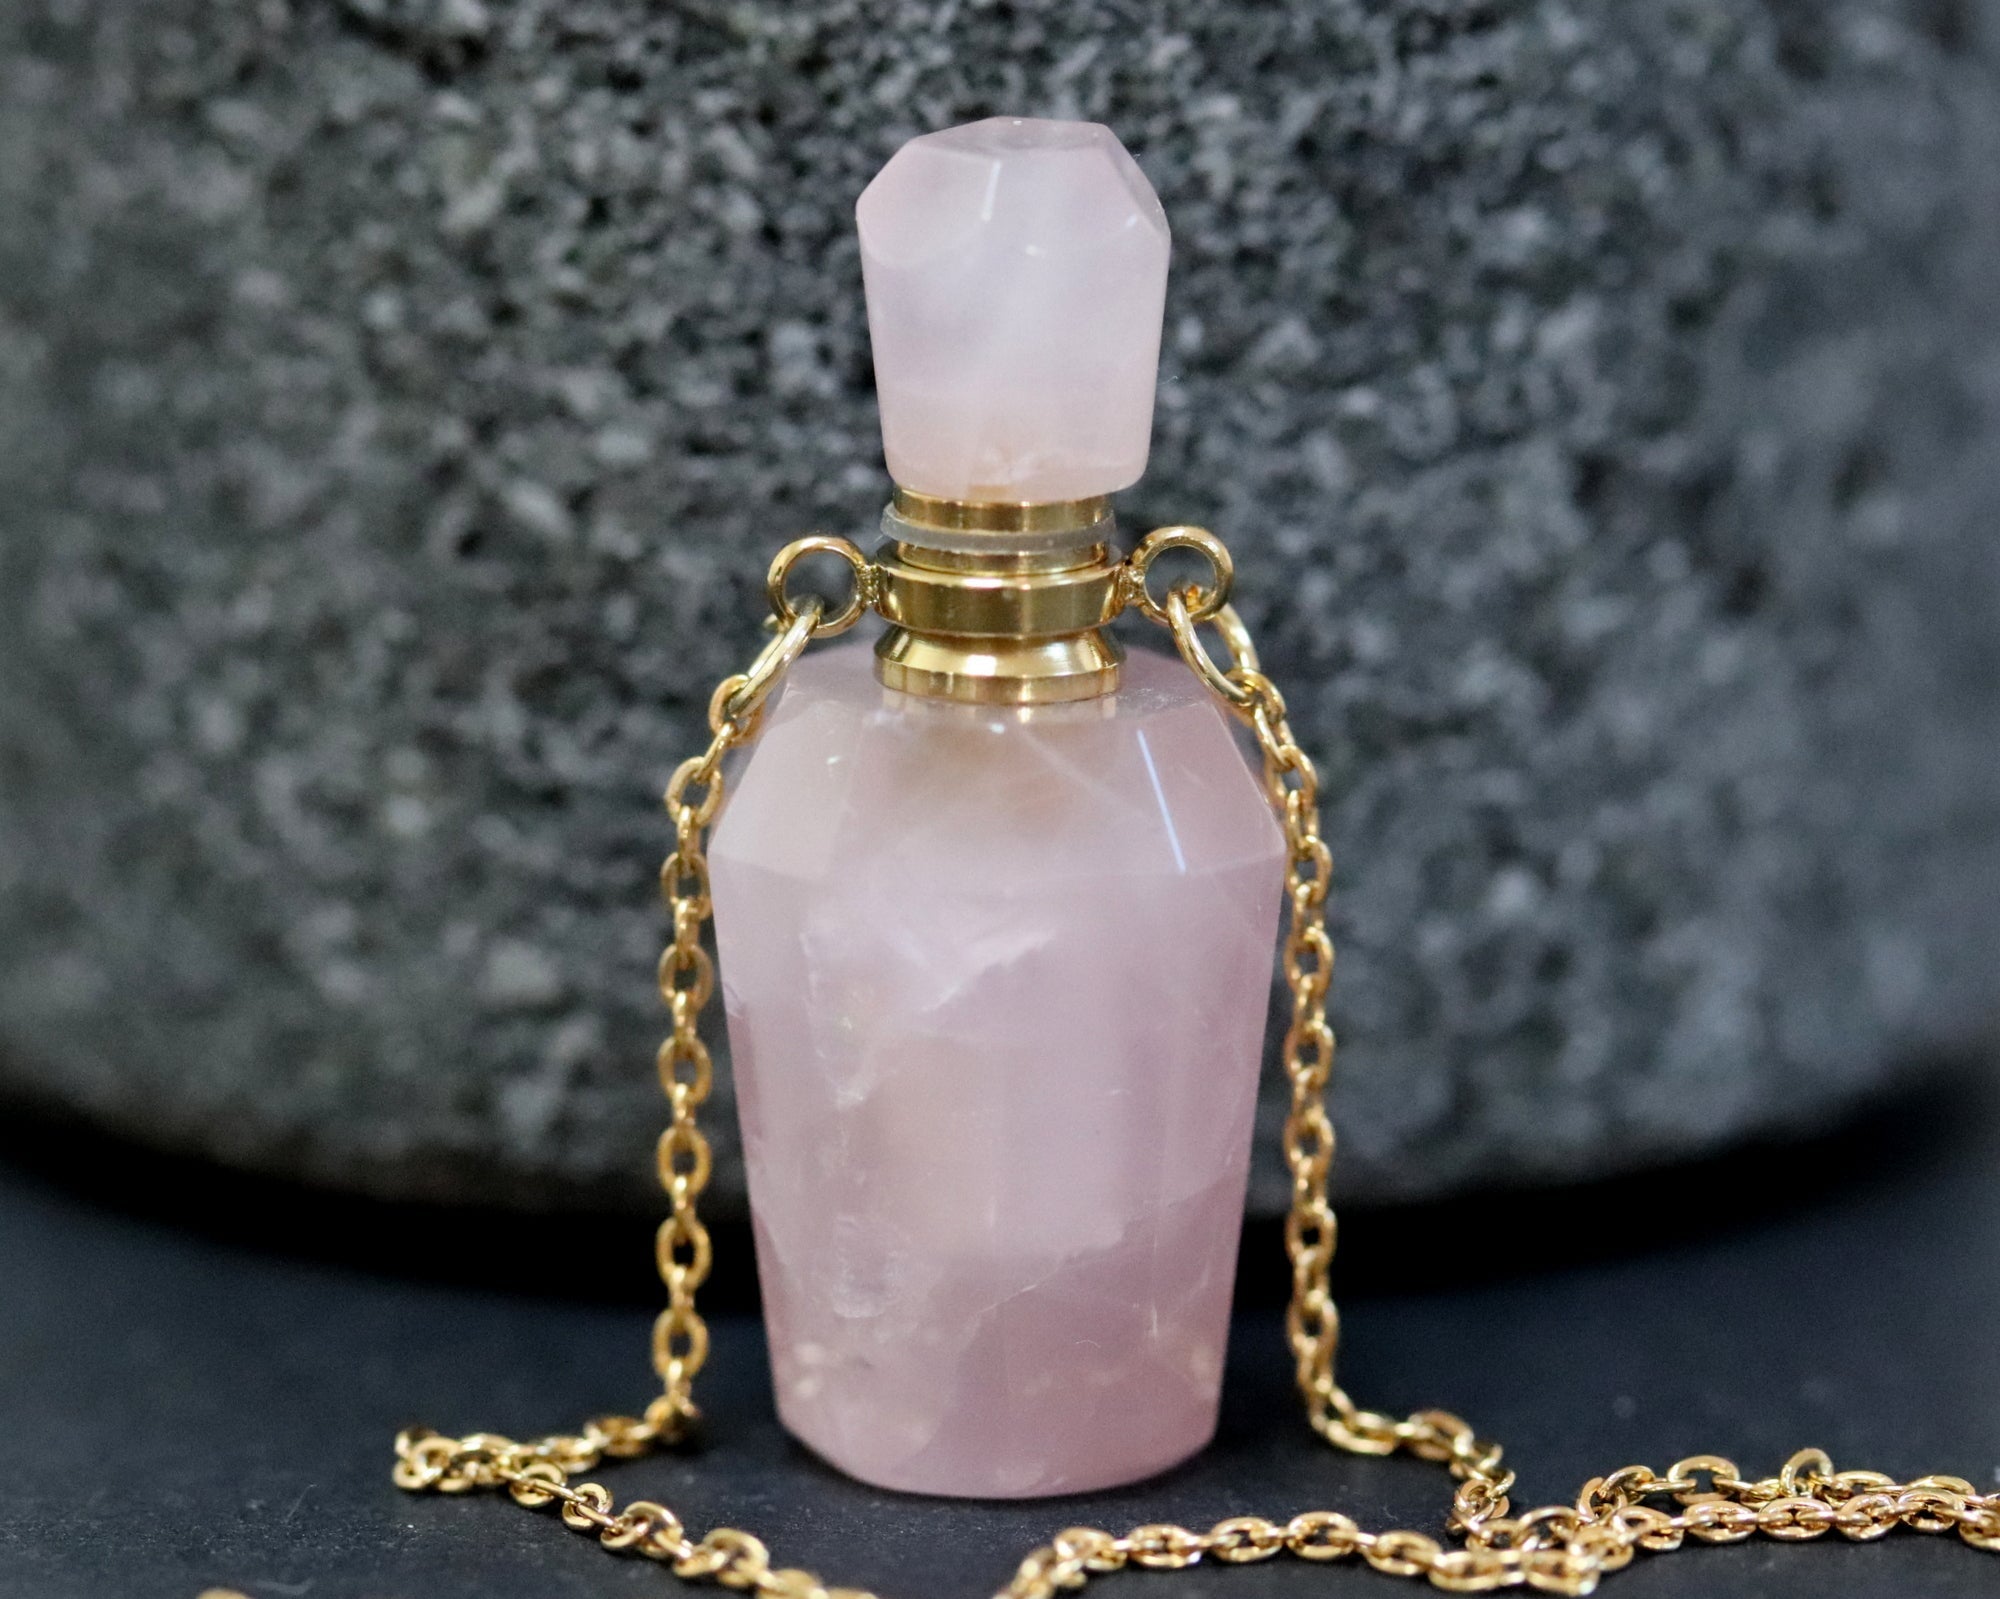 Rose Quartz bottle pendant, perfume or essential oil natural gemstone bottle necklace